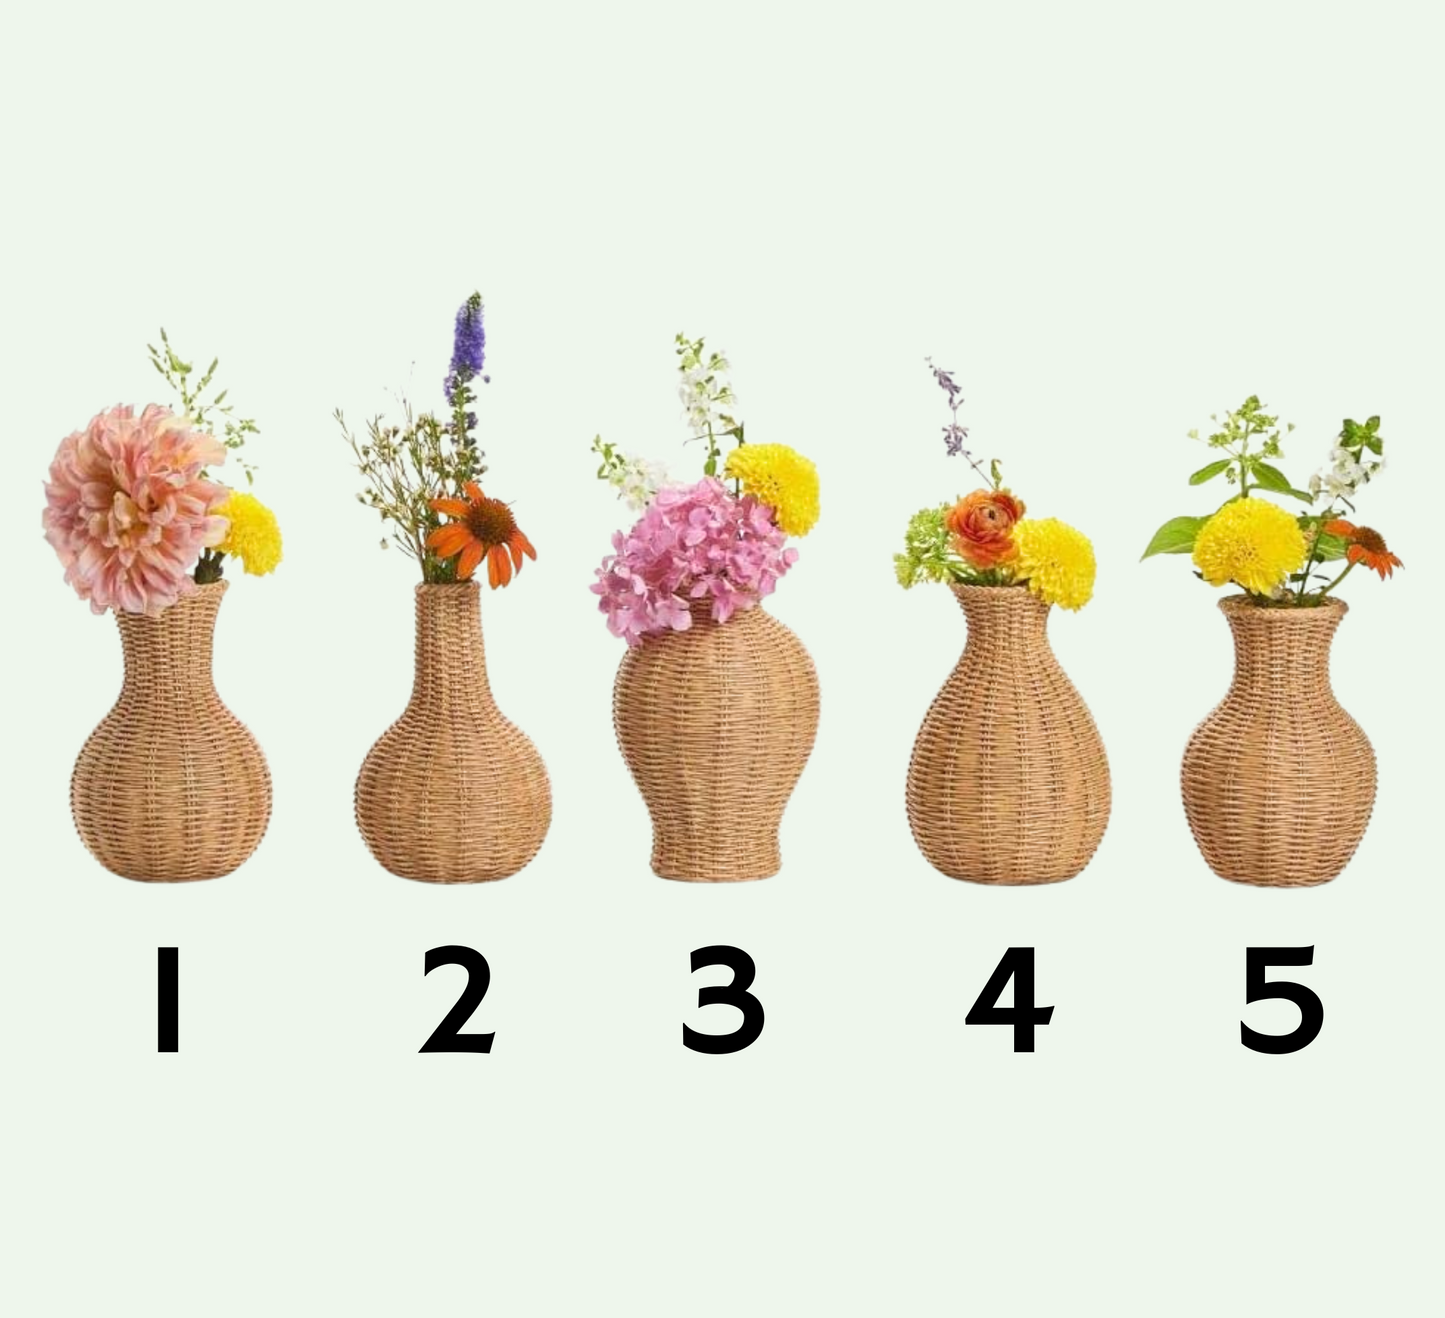 Rattan Wicker Pattern Vases